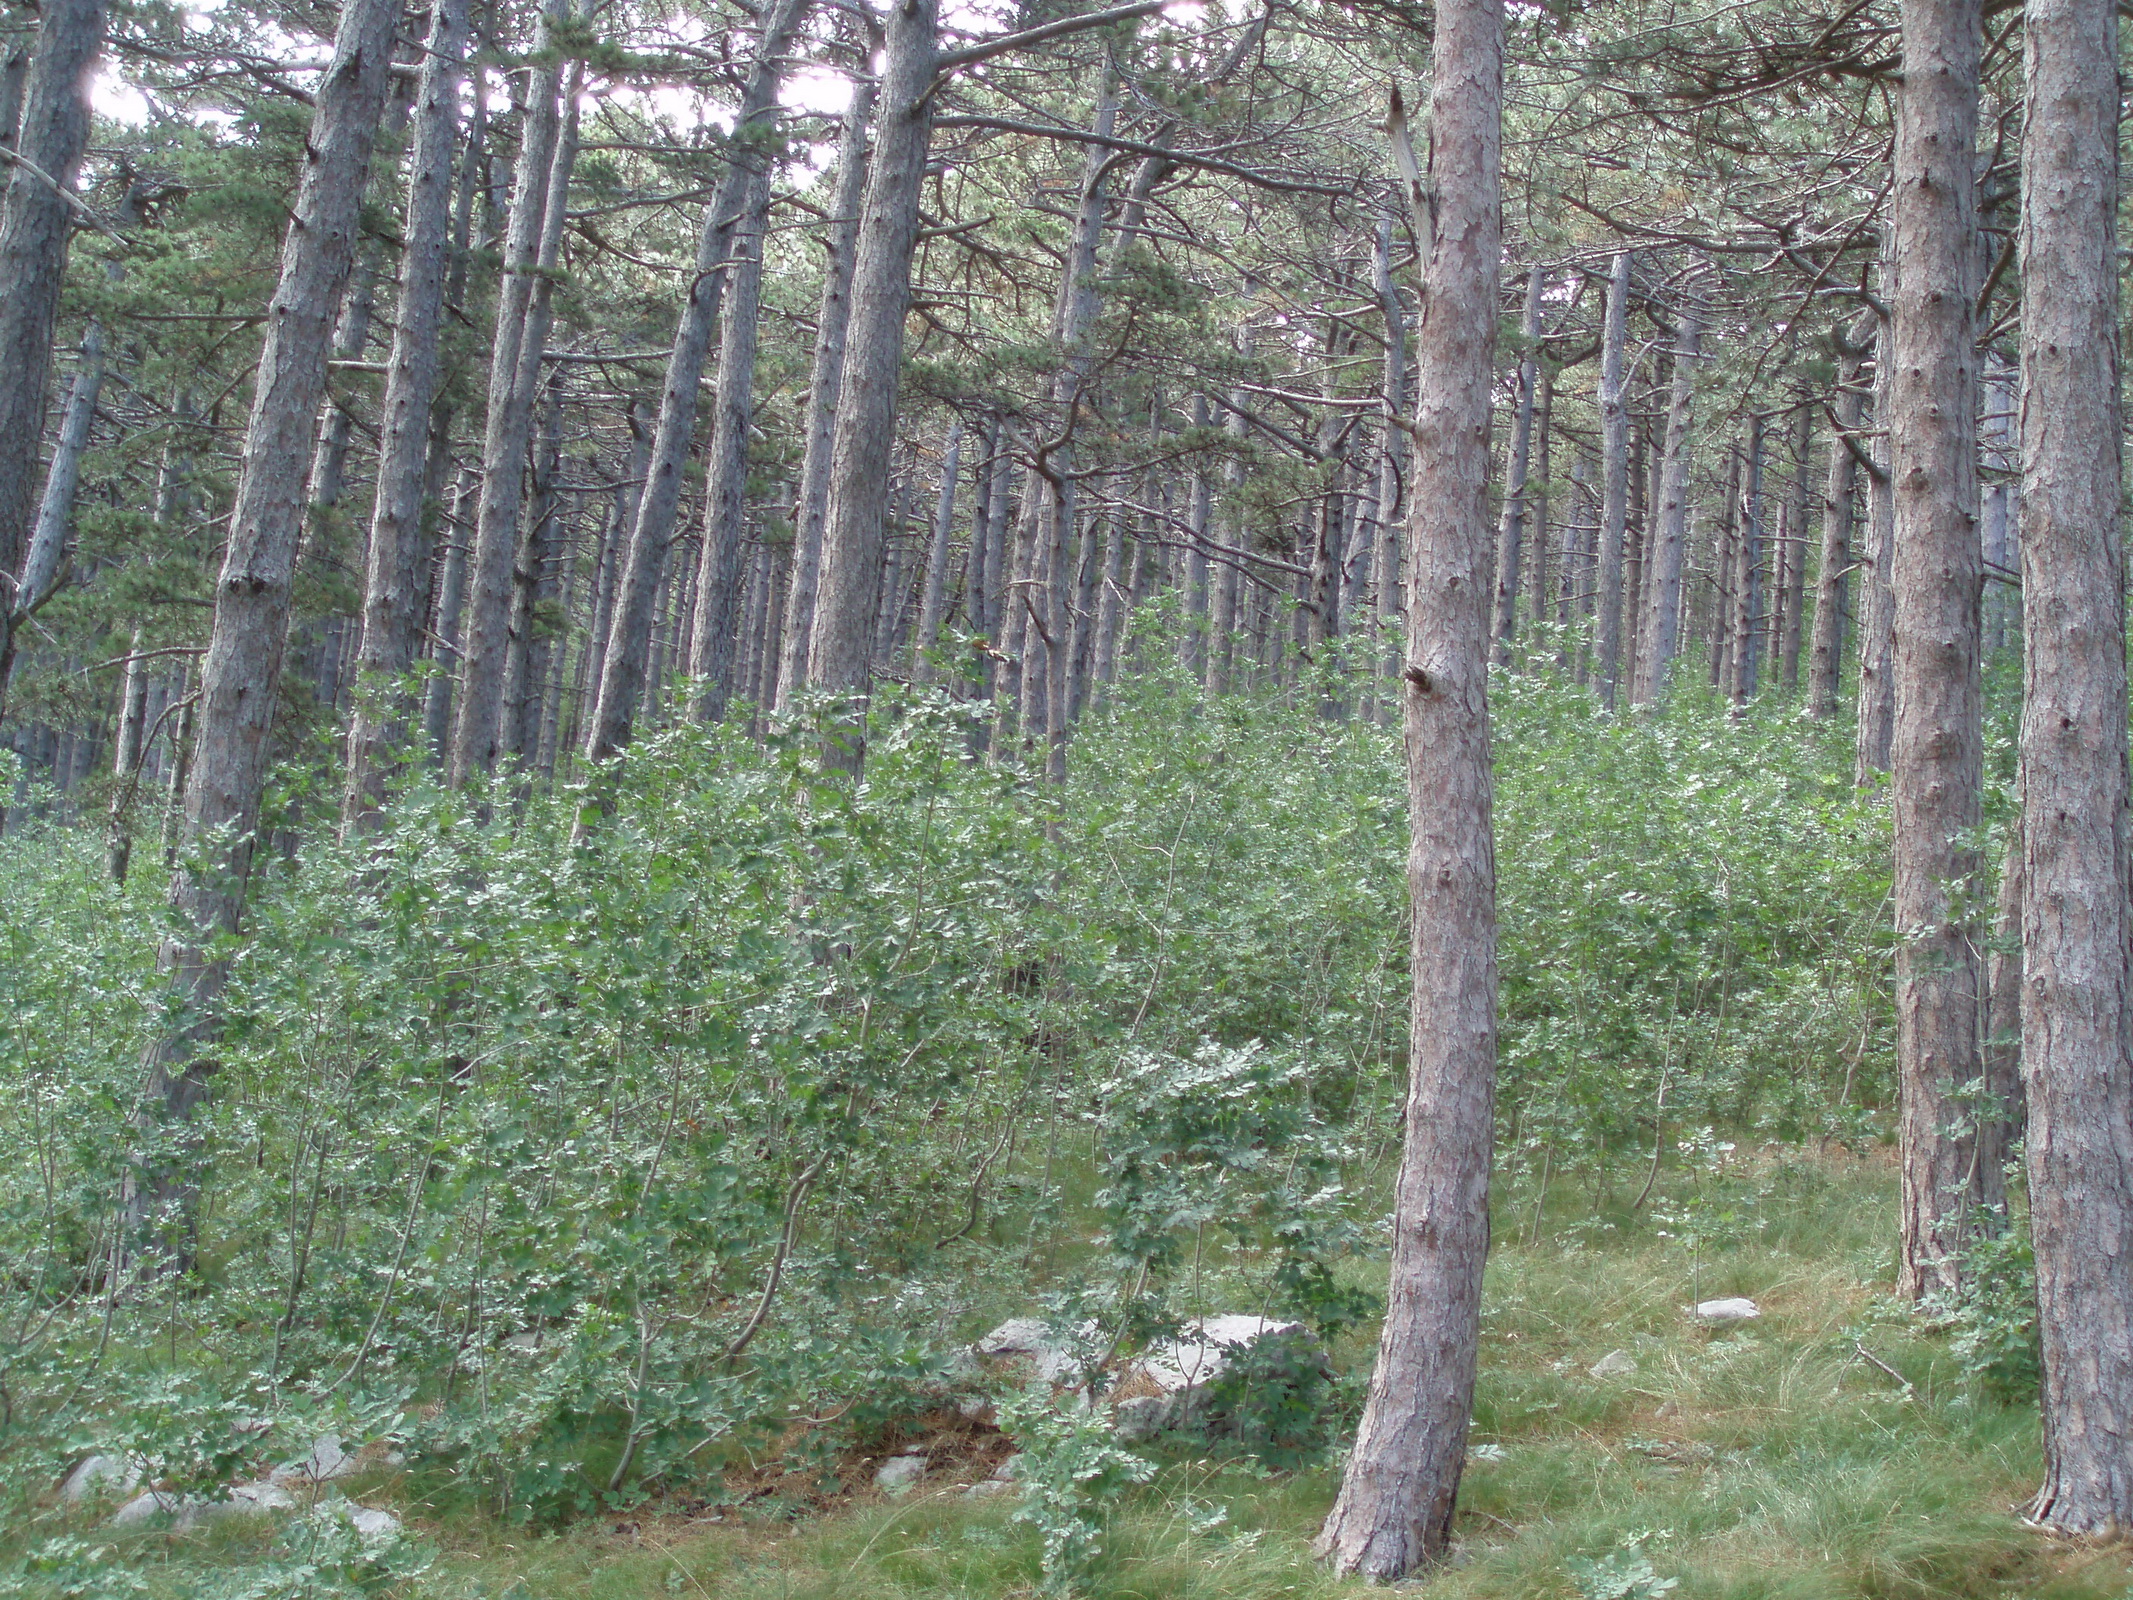 Senjska draga forest, The transitional sylvidynamic stage in Mediterranean forest of Black pine (Pinus nigra Arn.) (C) Anic